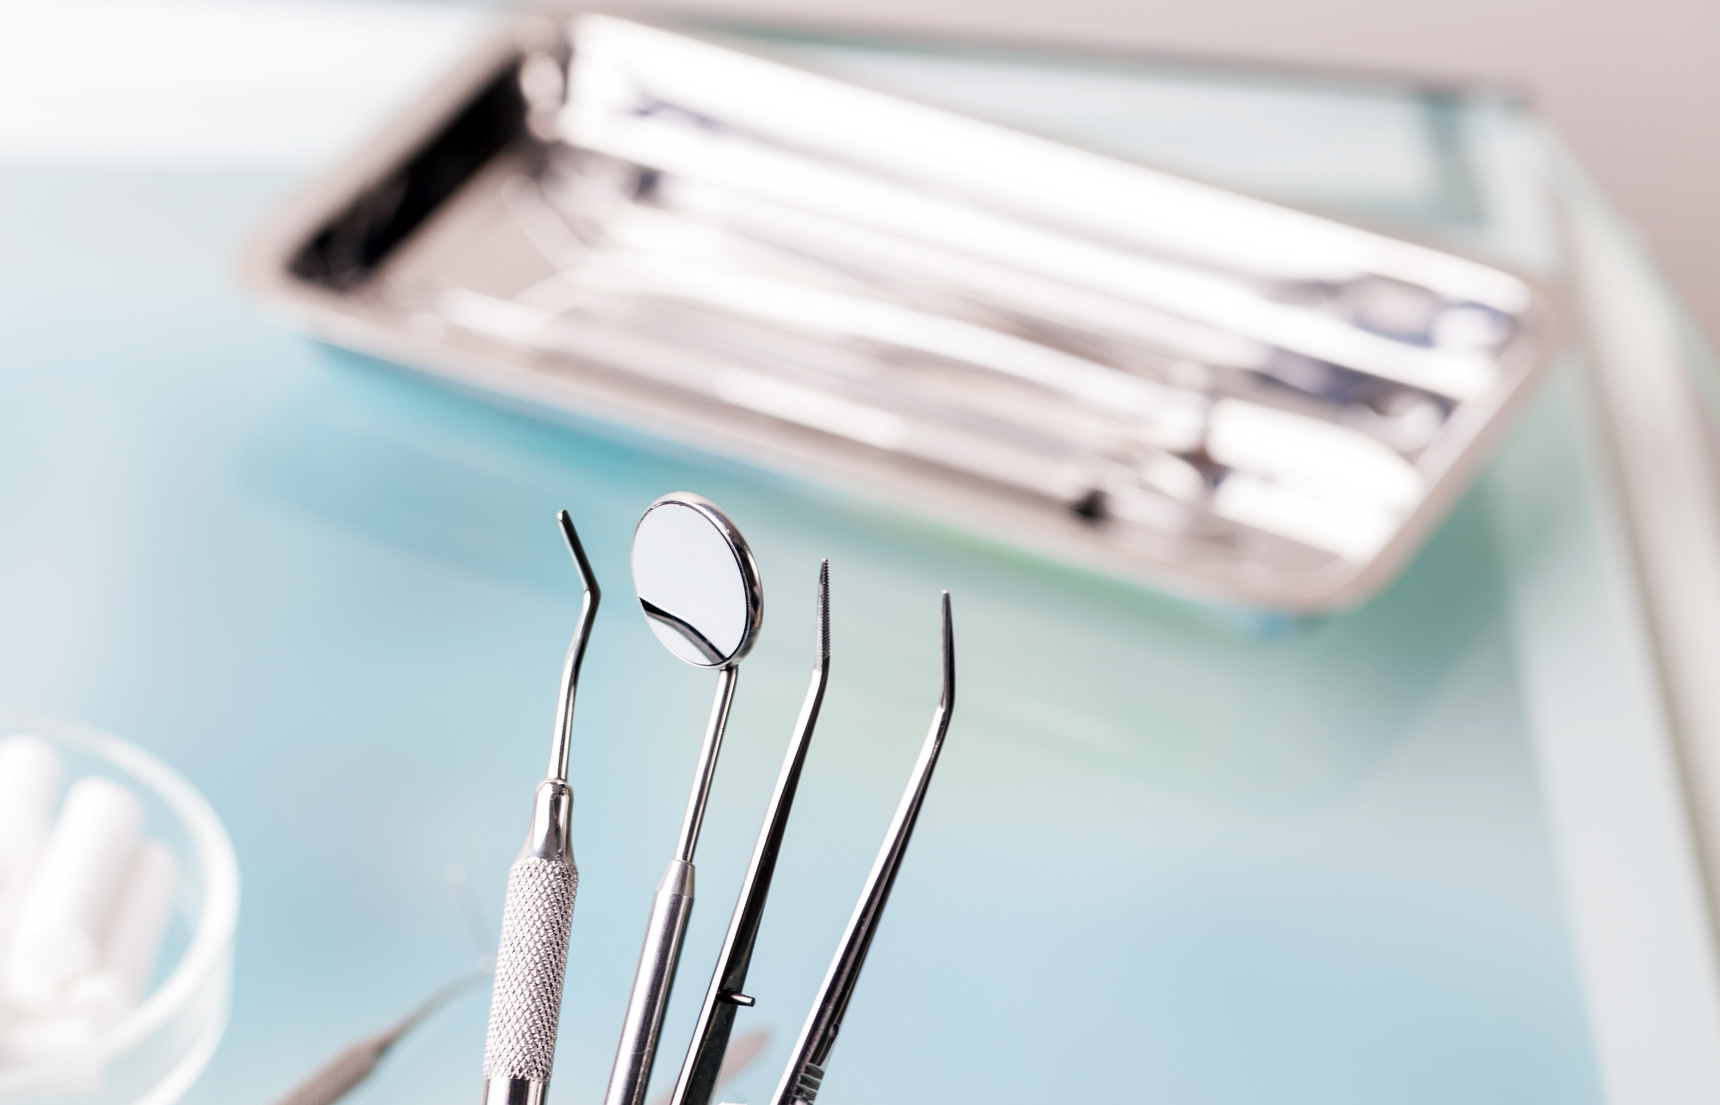 dental Instruments, equipment, hygiene, dental, health, mirror, surgery